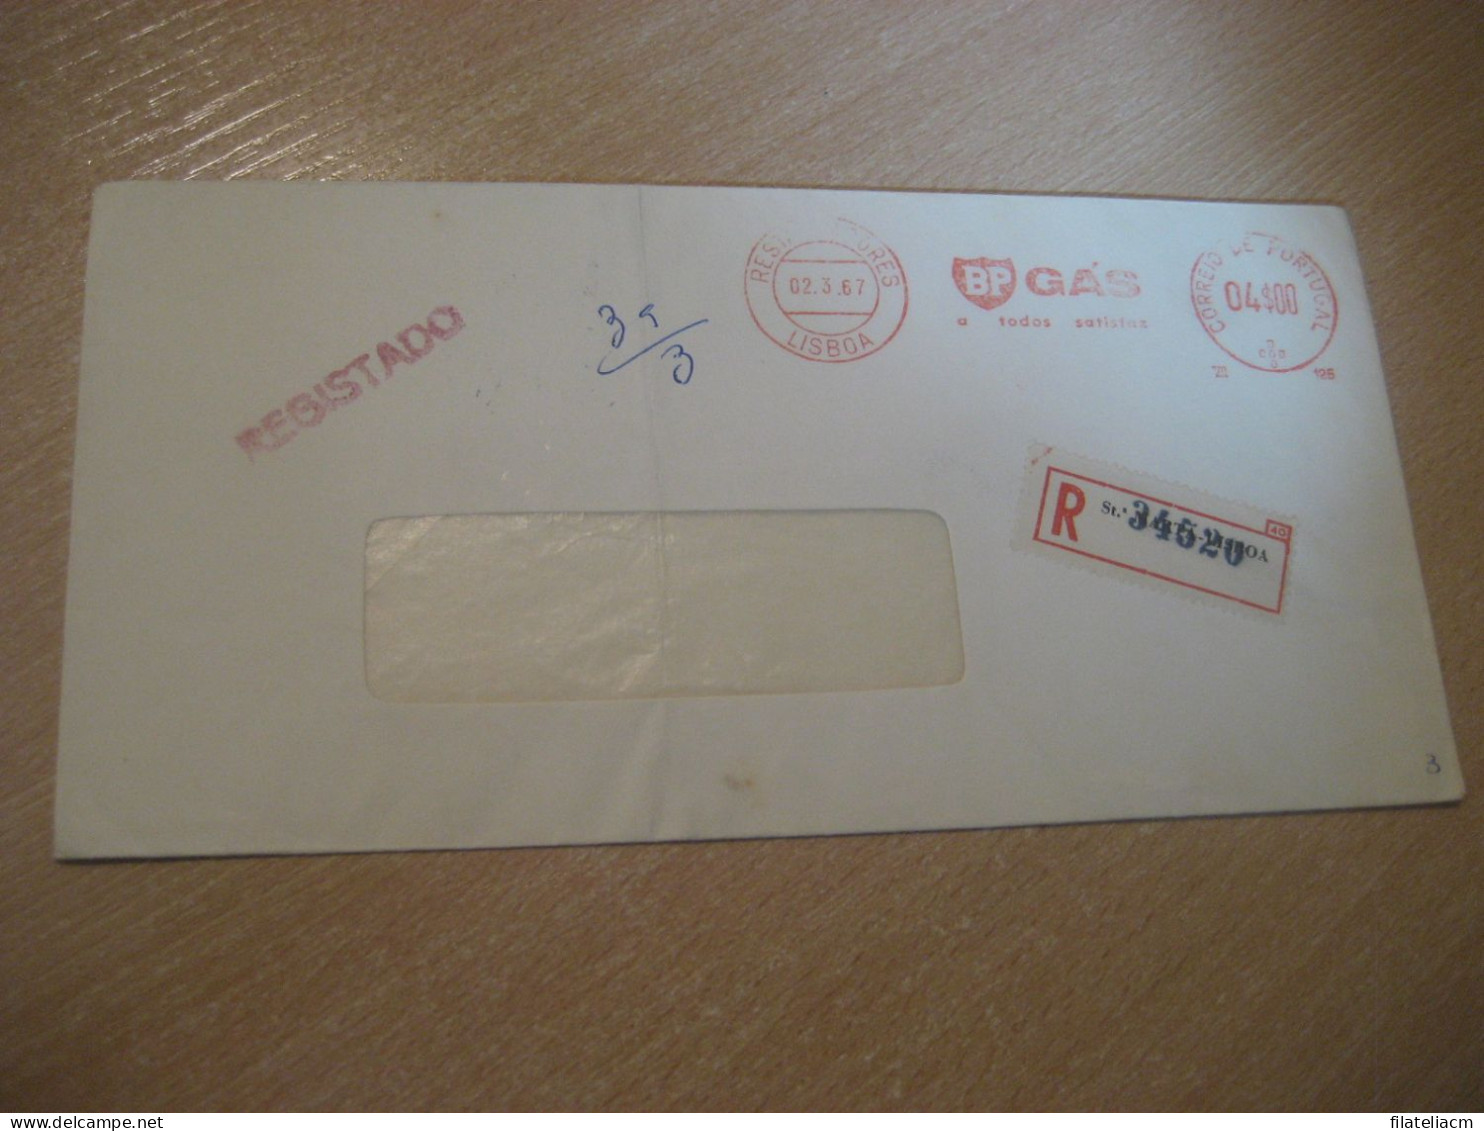 LISBOA 1967 BP Gas Oil Registered Meter Mail Cancel Cover PORTUGAL - Storia Postale